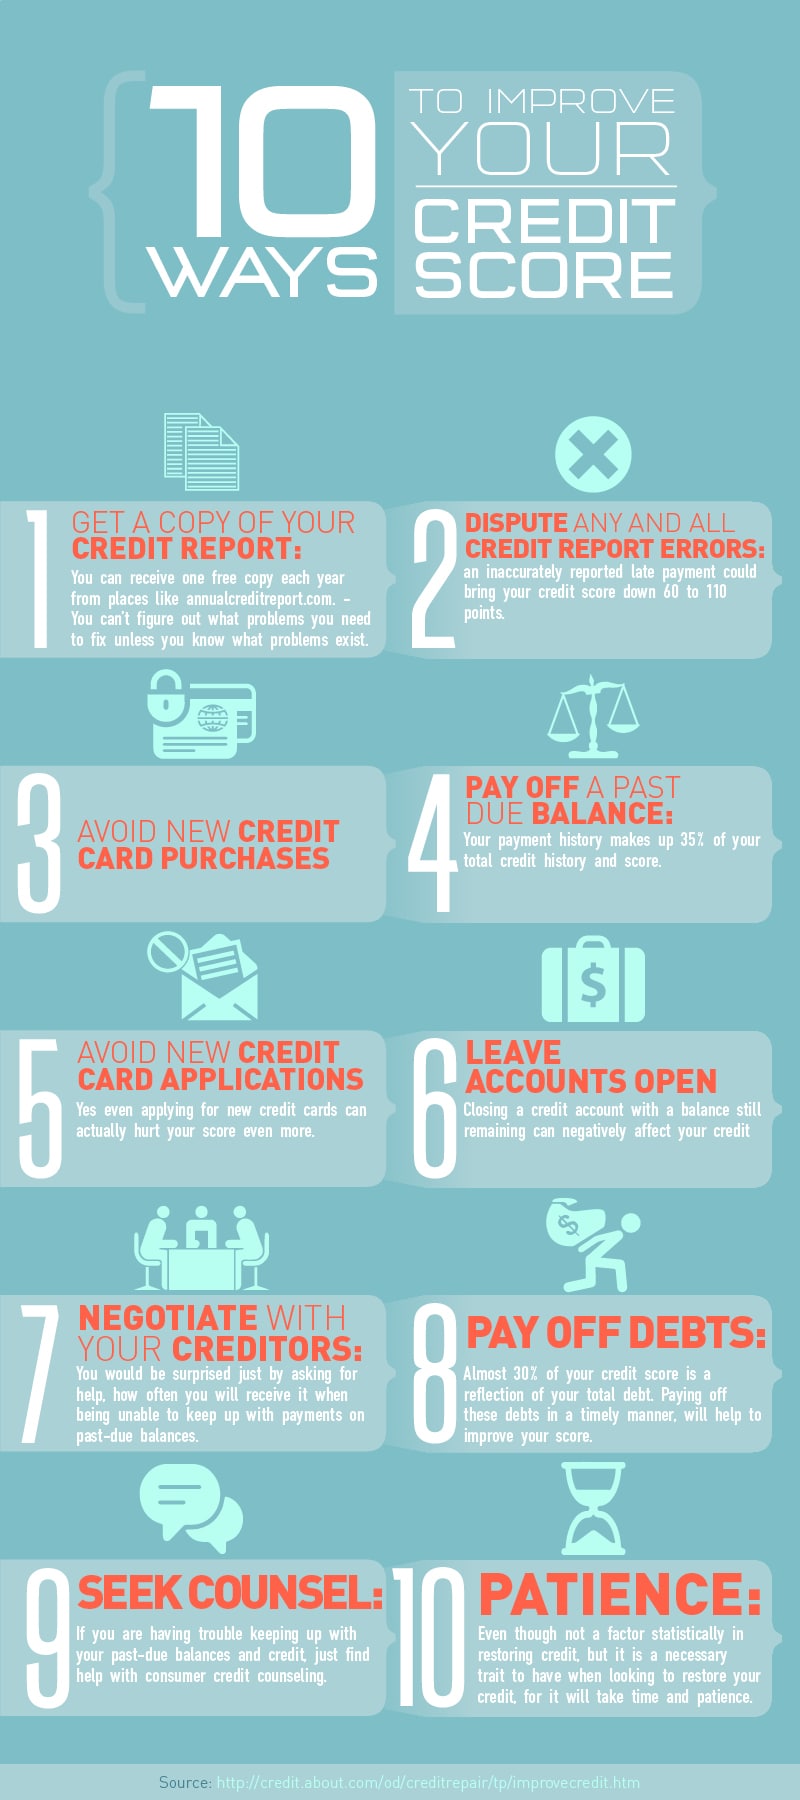 service finance company credit score requirements